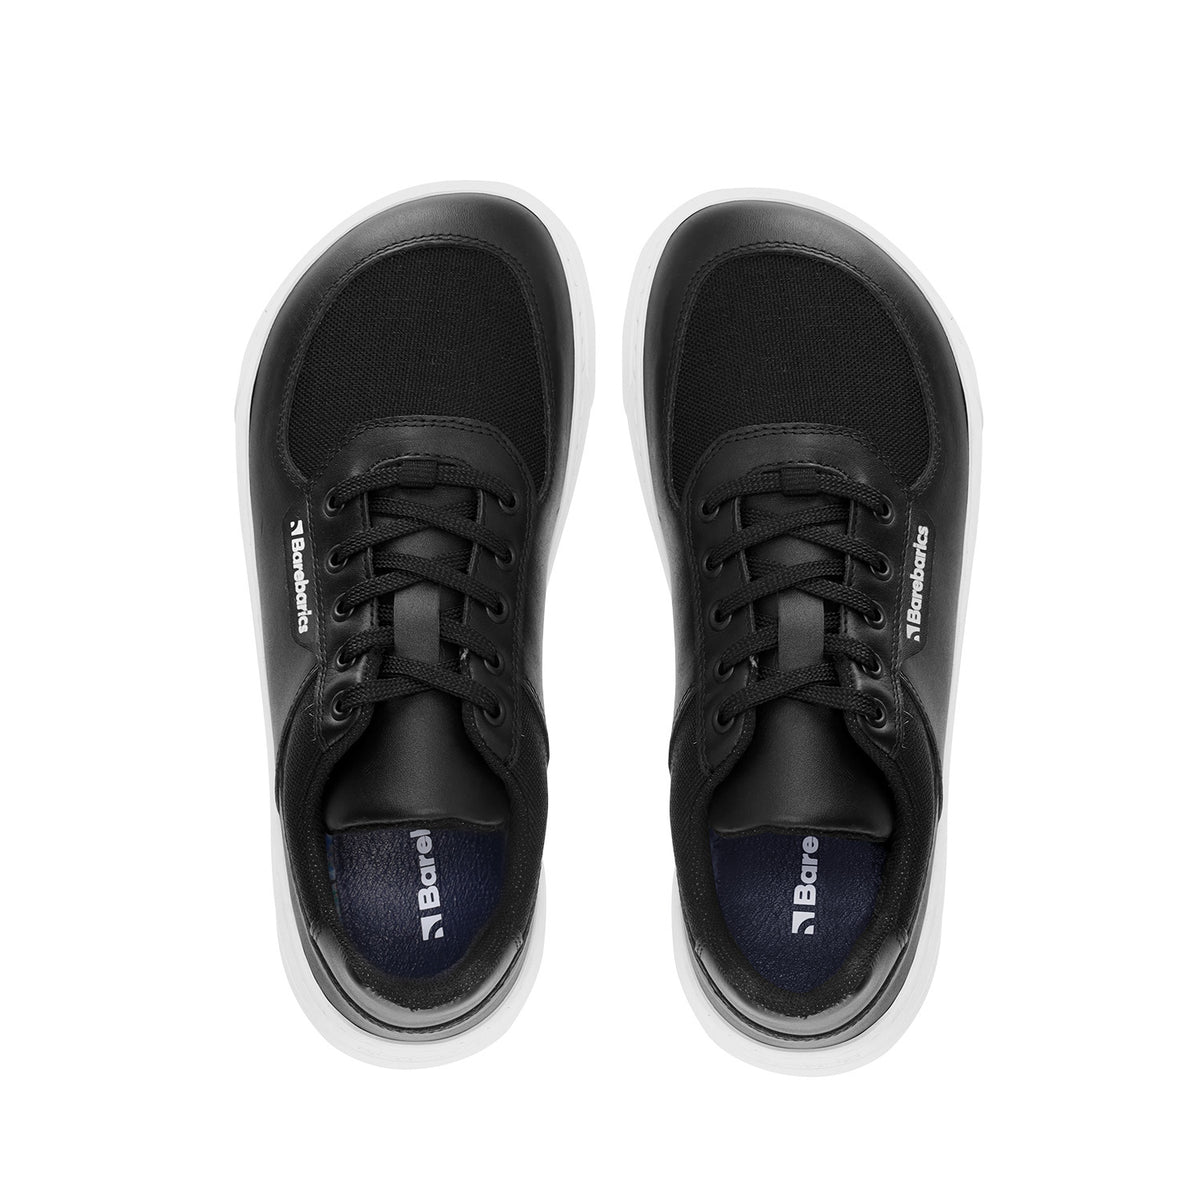 Barefoot Sneakers Barebarics Bravo - Black & White 4 OzBarefoot Australia